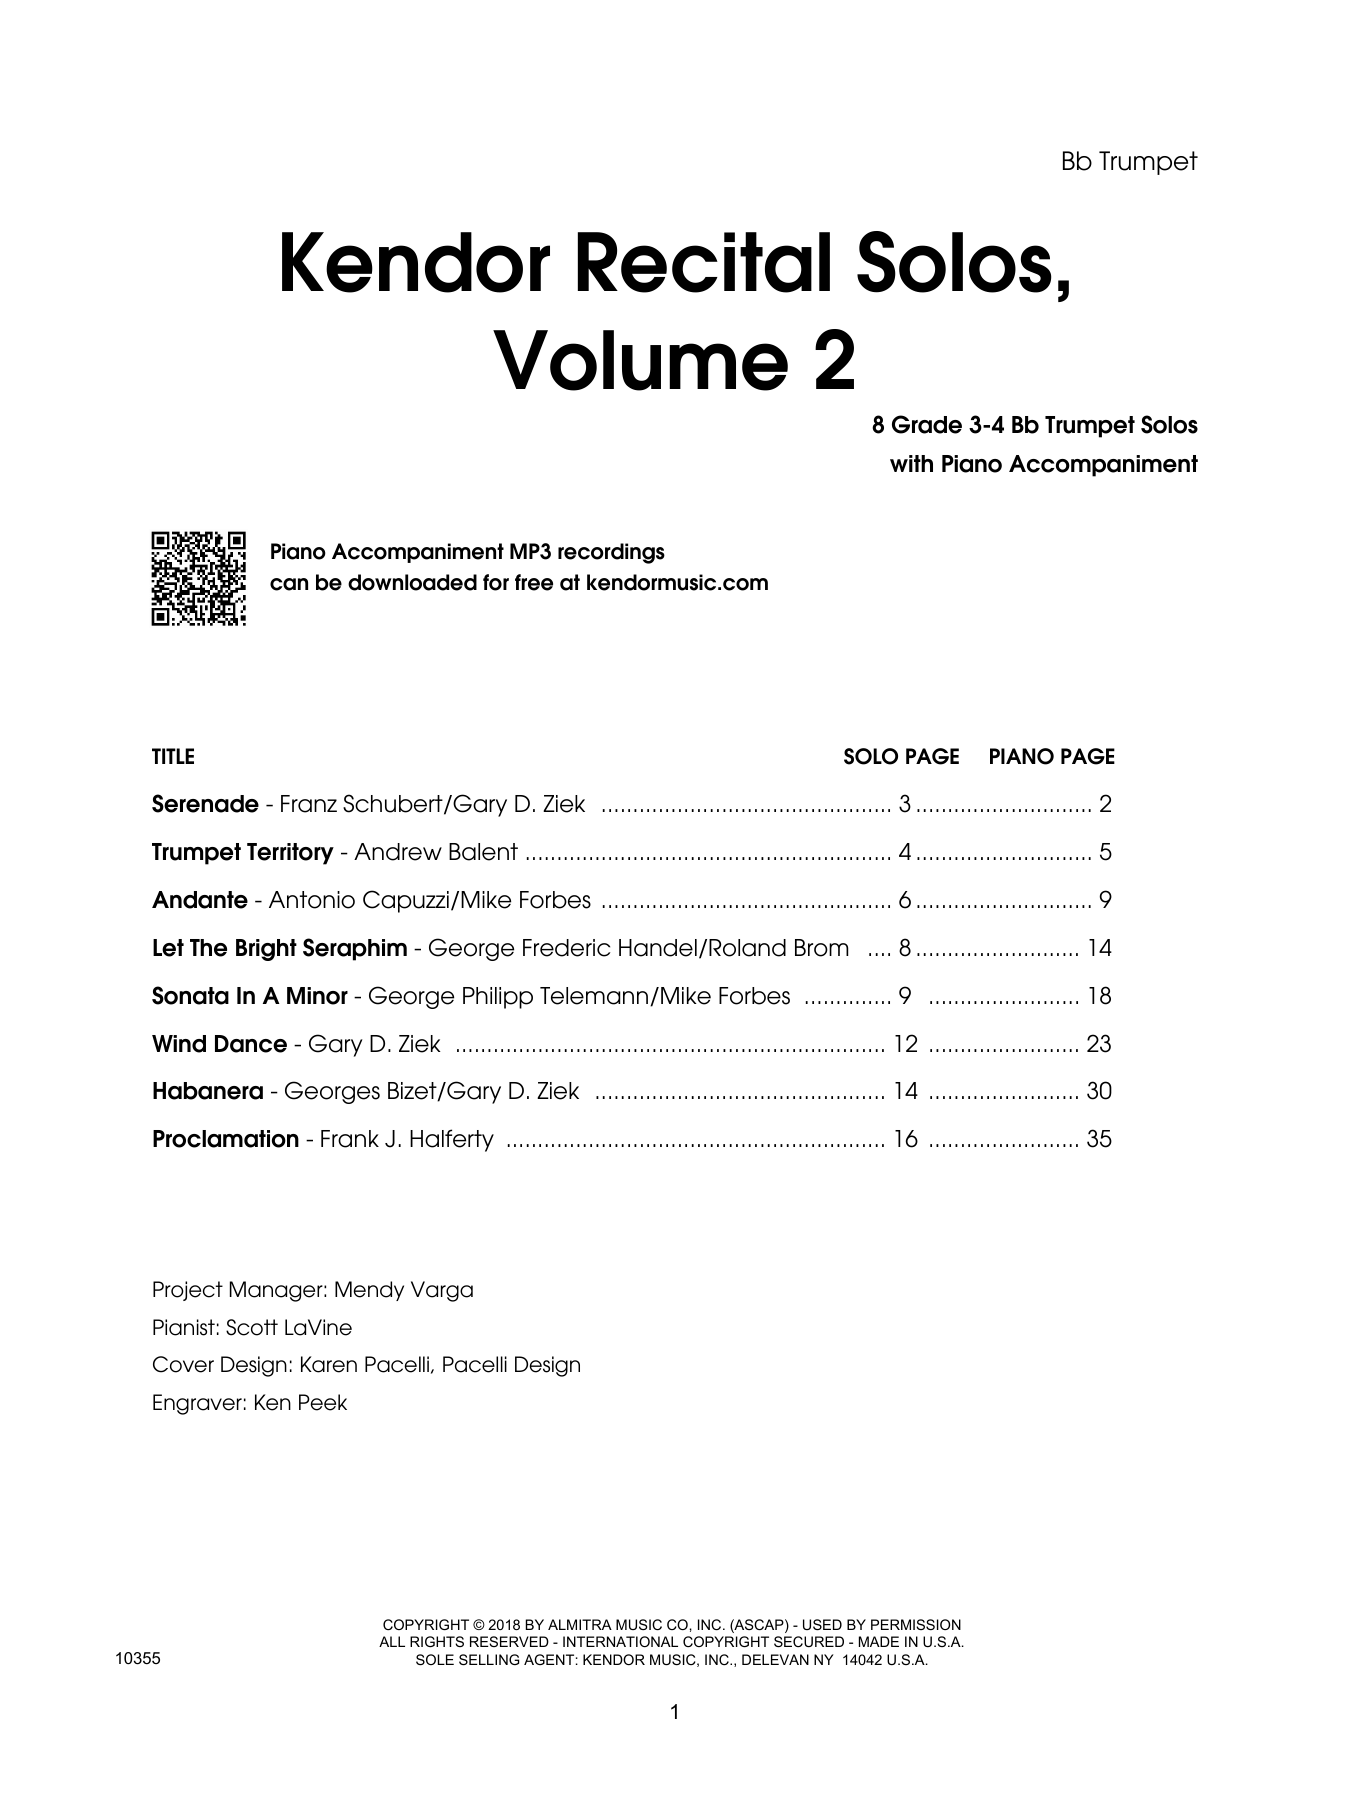 Kendor Recital Solos, Volume 2 - Bb Trumpet - Bb Trumpet (Brass Solo) von Various